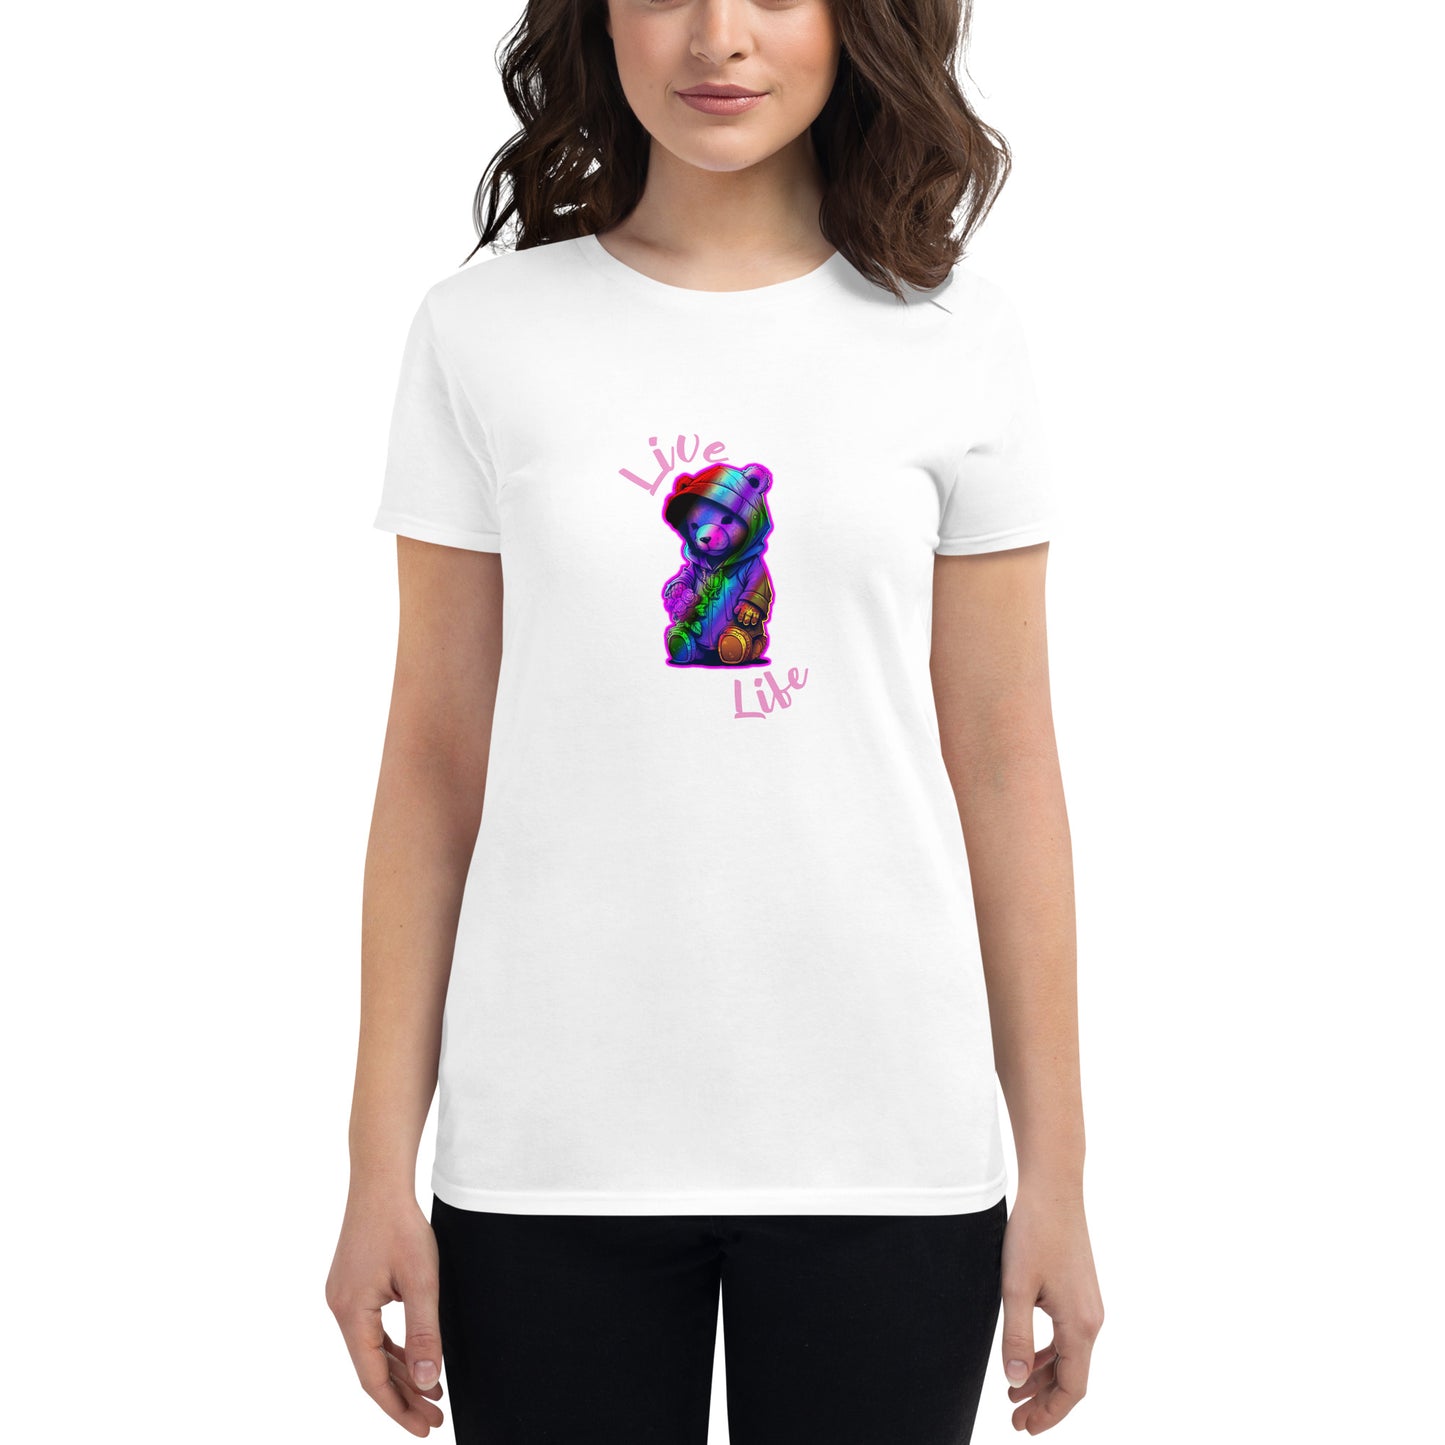 Knqv "Live Life" | Women's short sleeve t-shirt